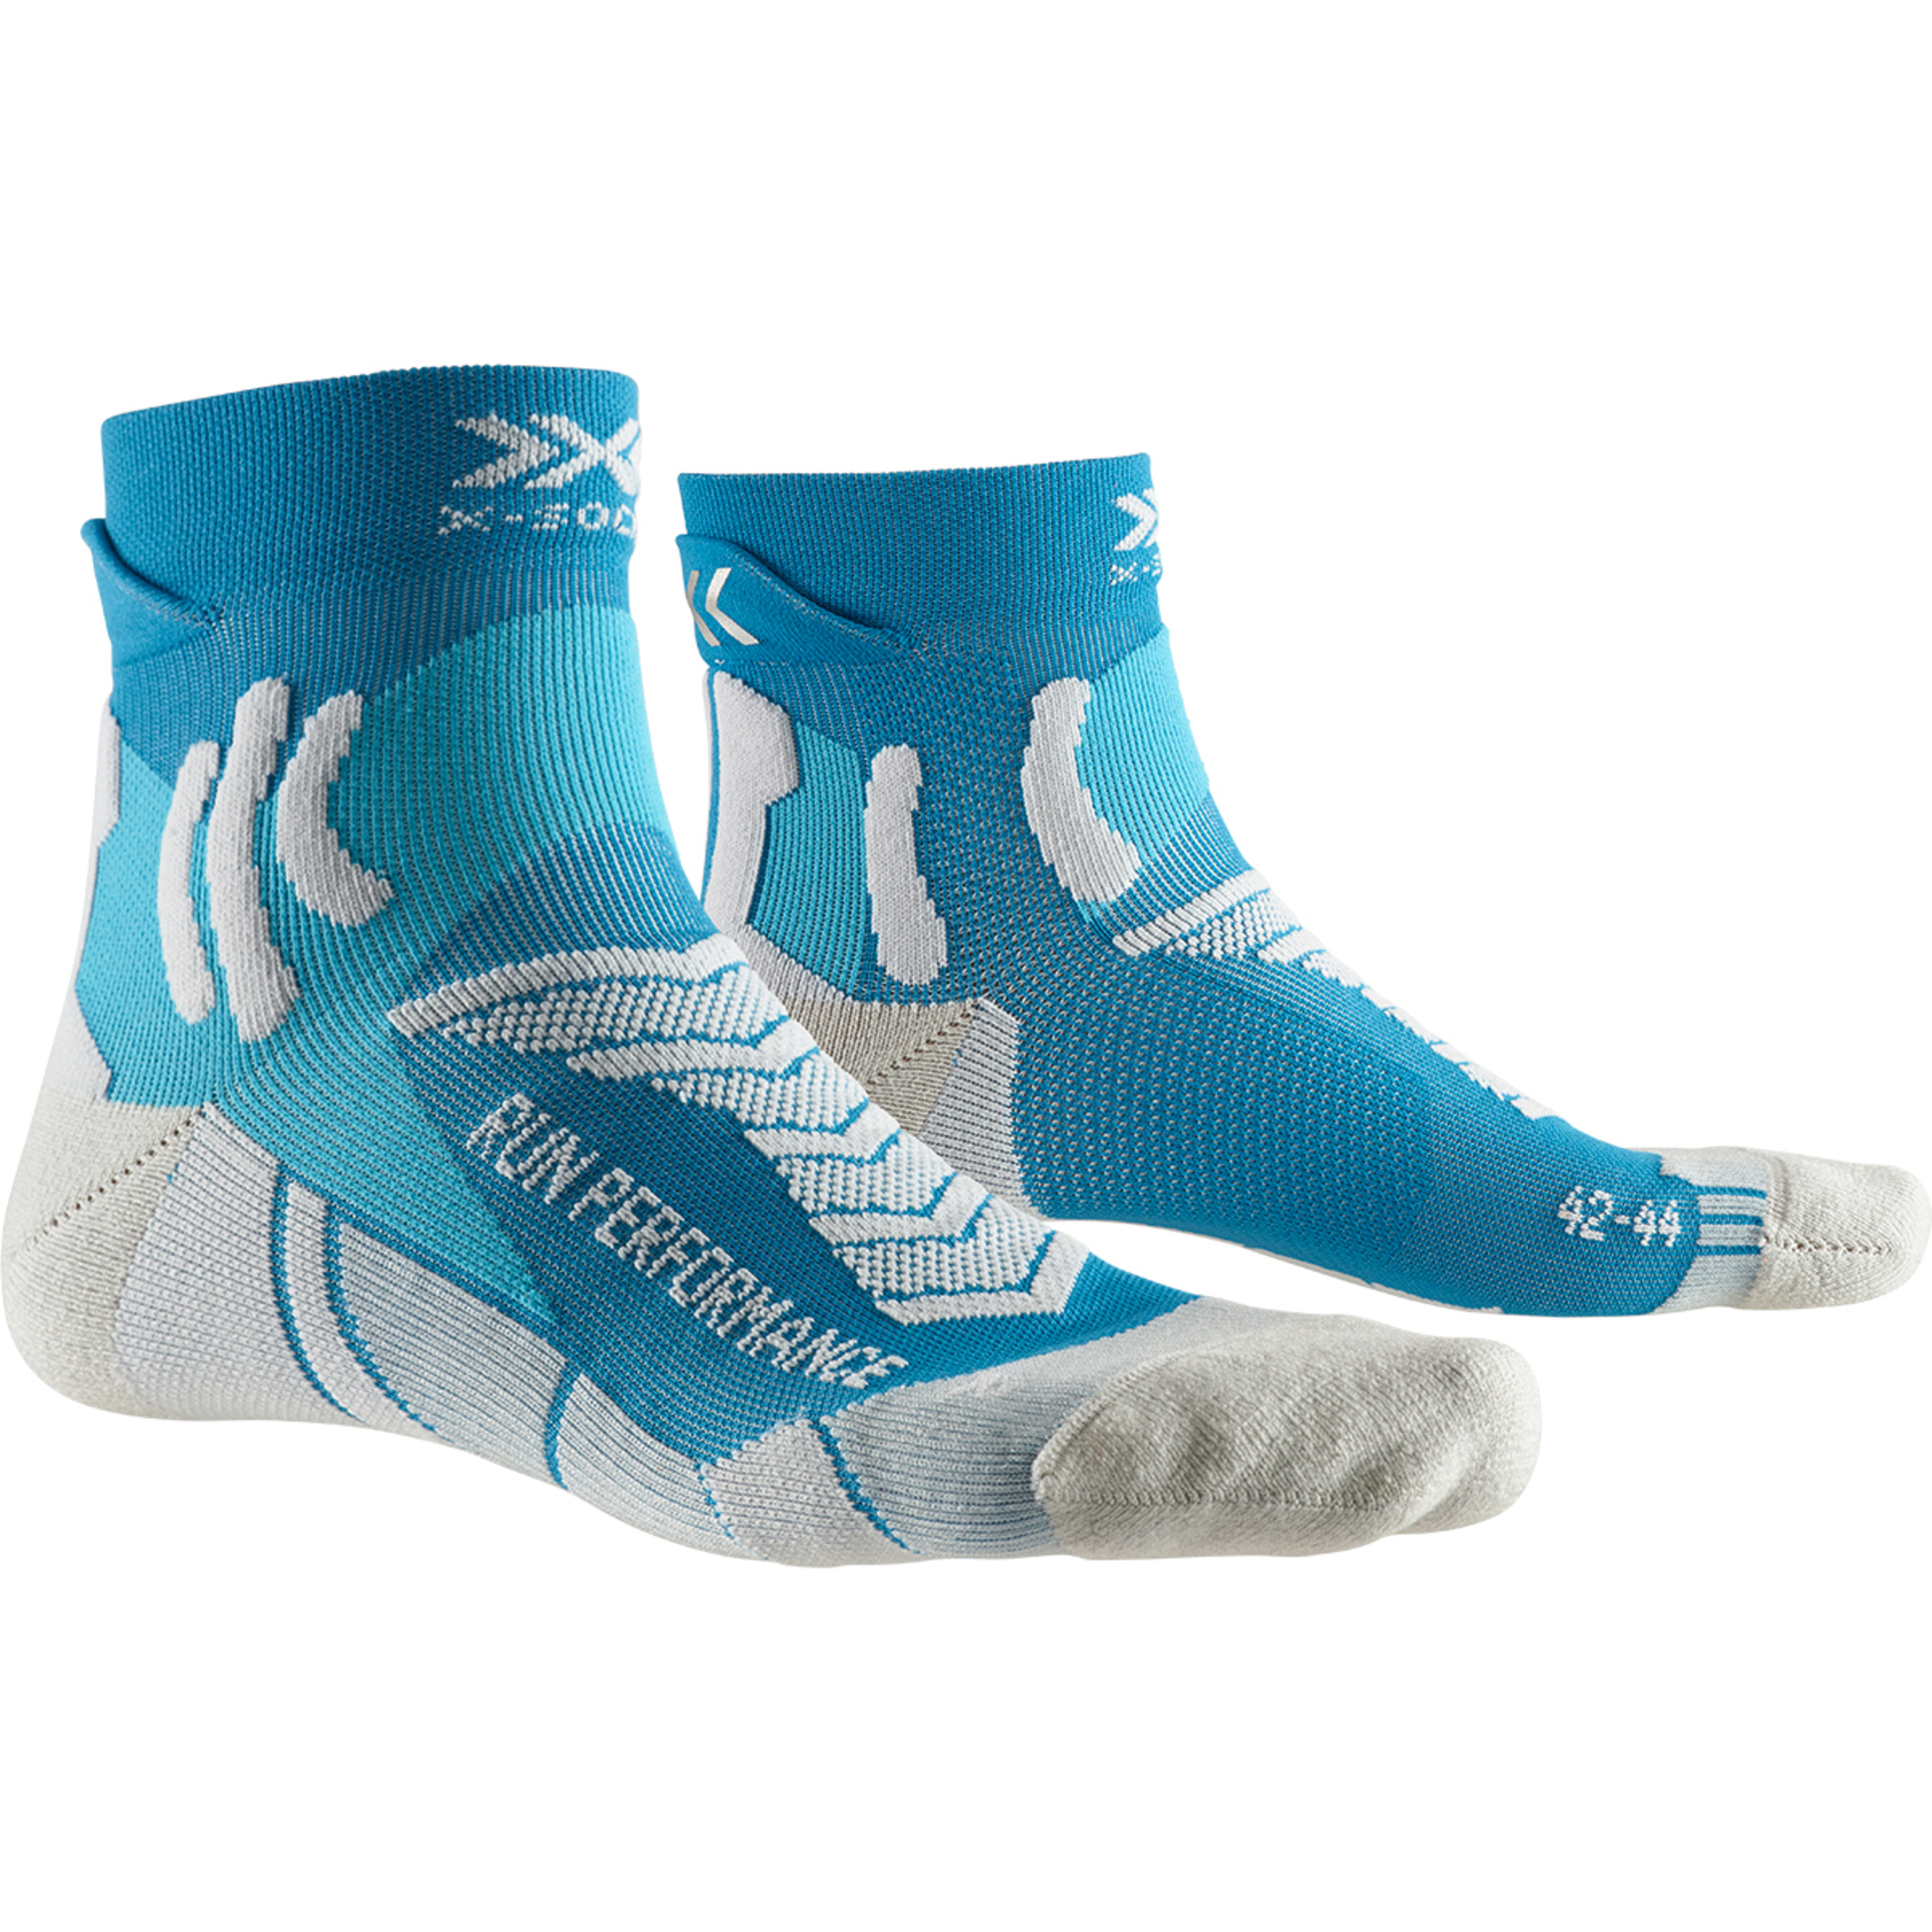 Calcetin Run Performance  X-socks - azul - 